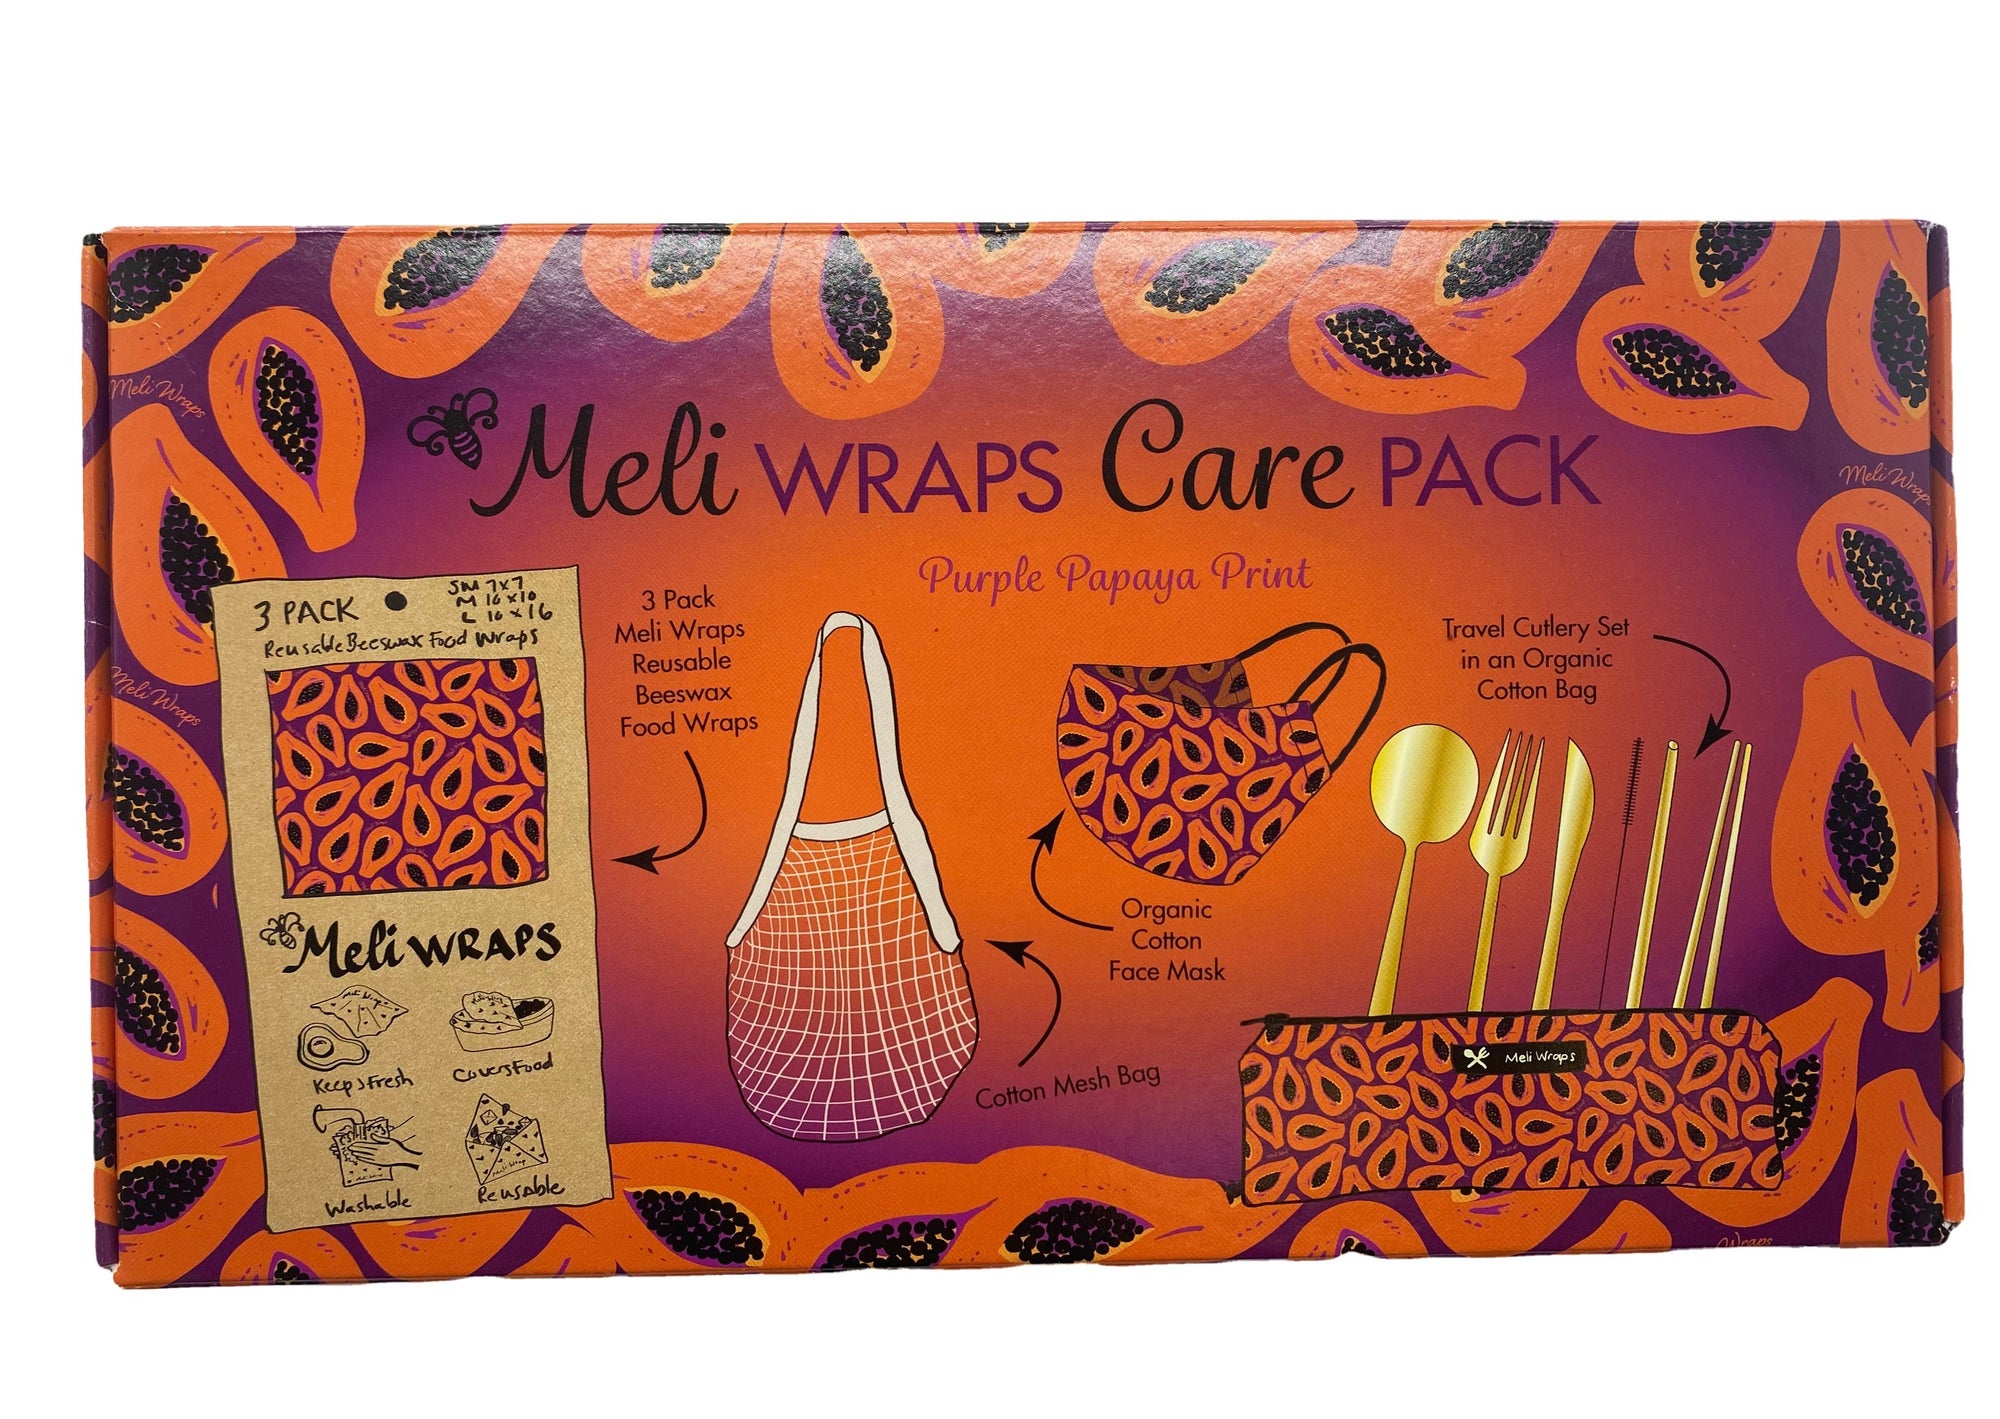 Meli Wraps Care Collection Purple Papaya Care Pack